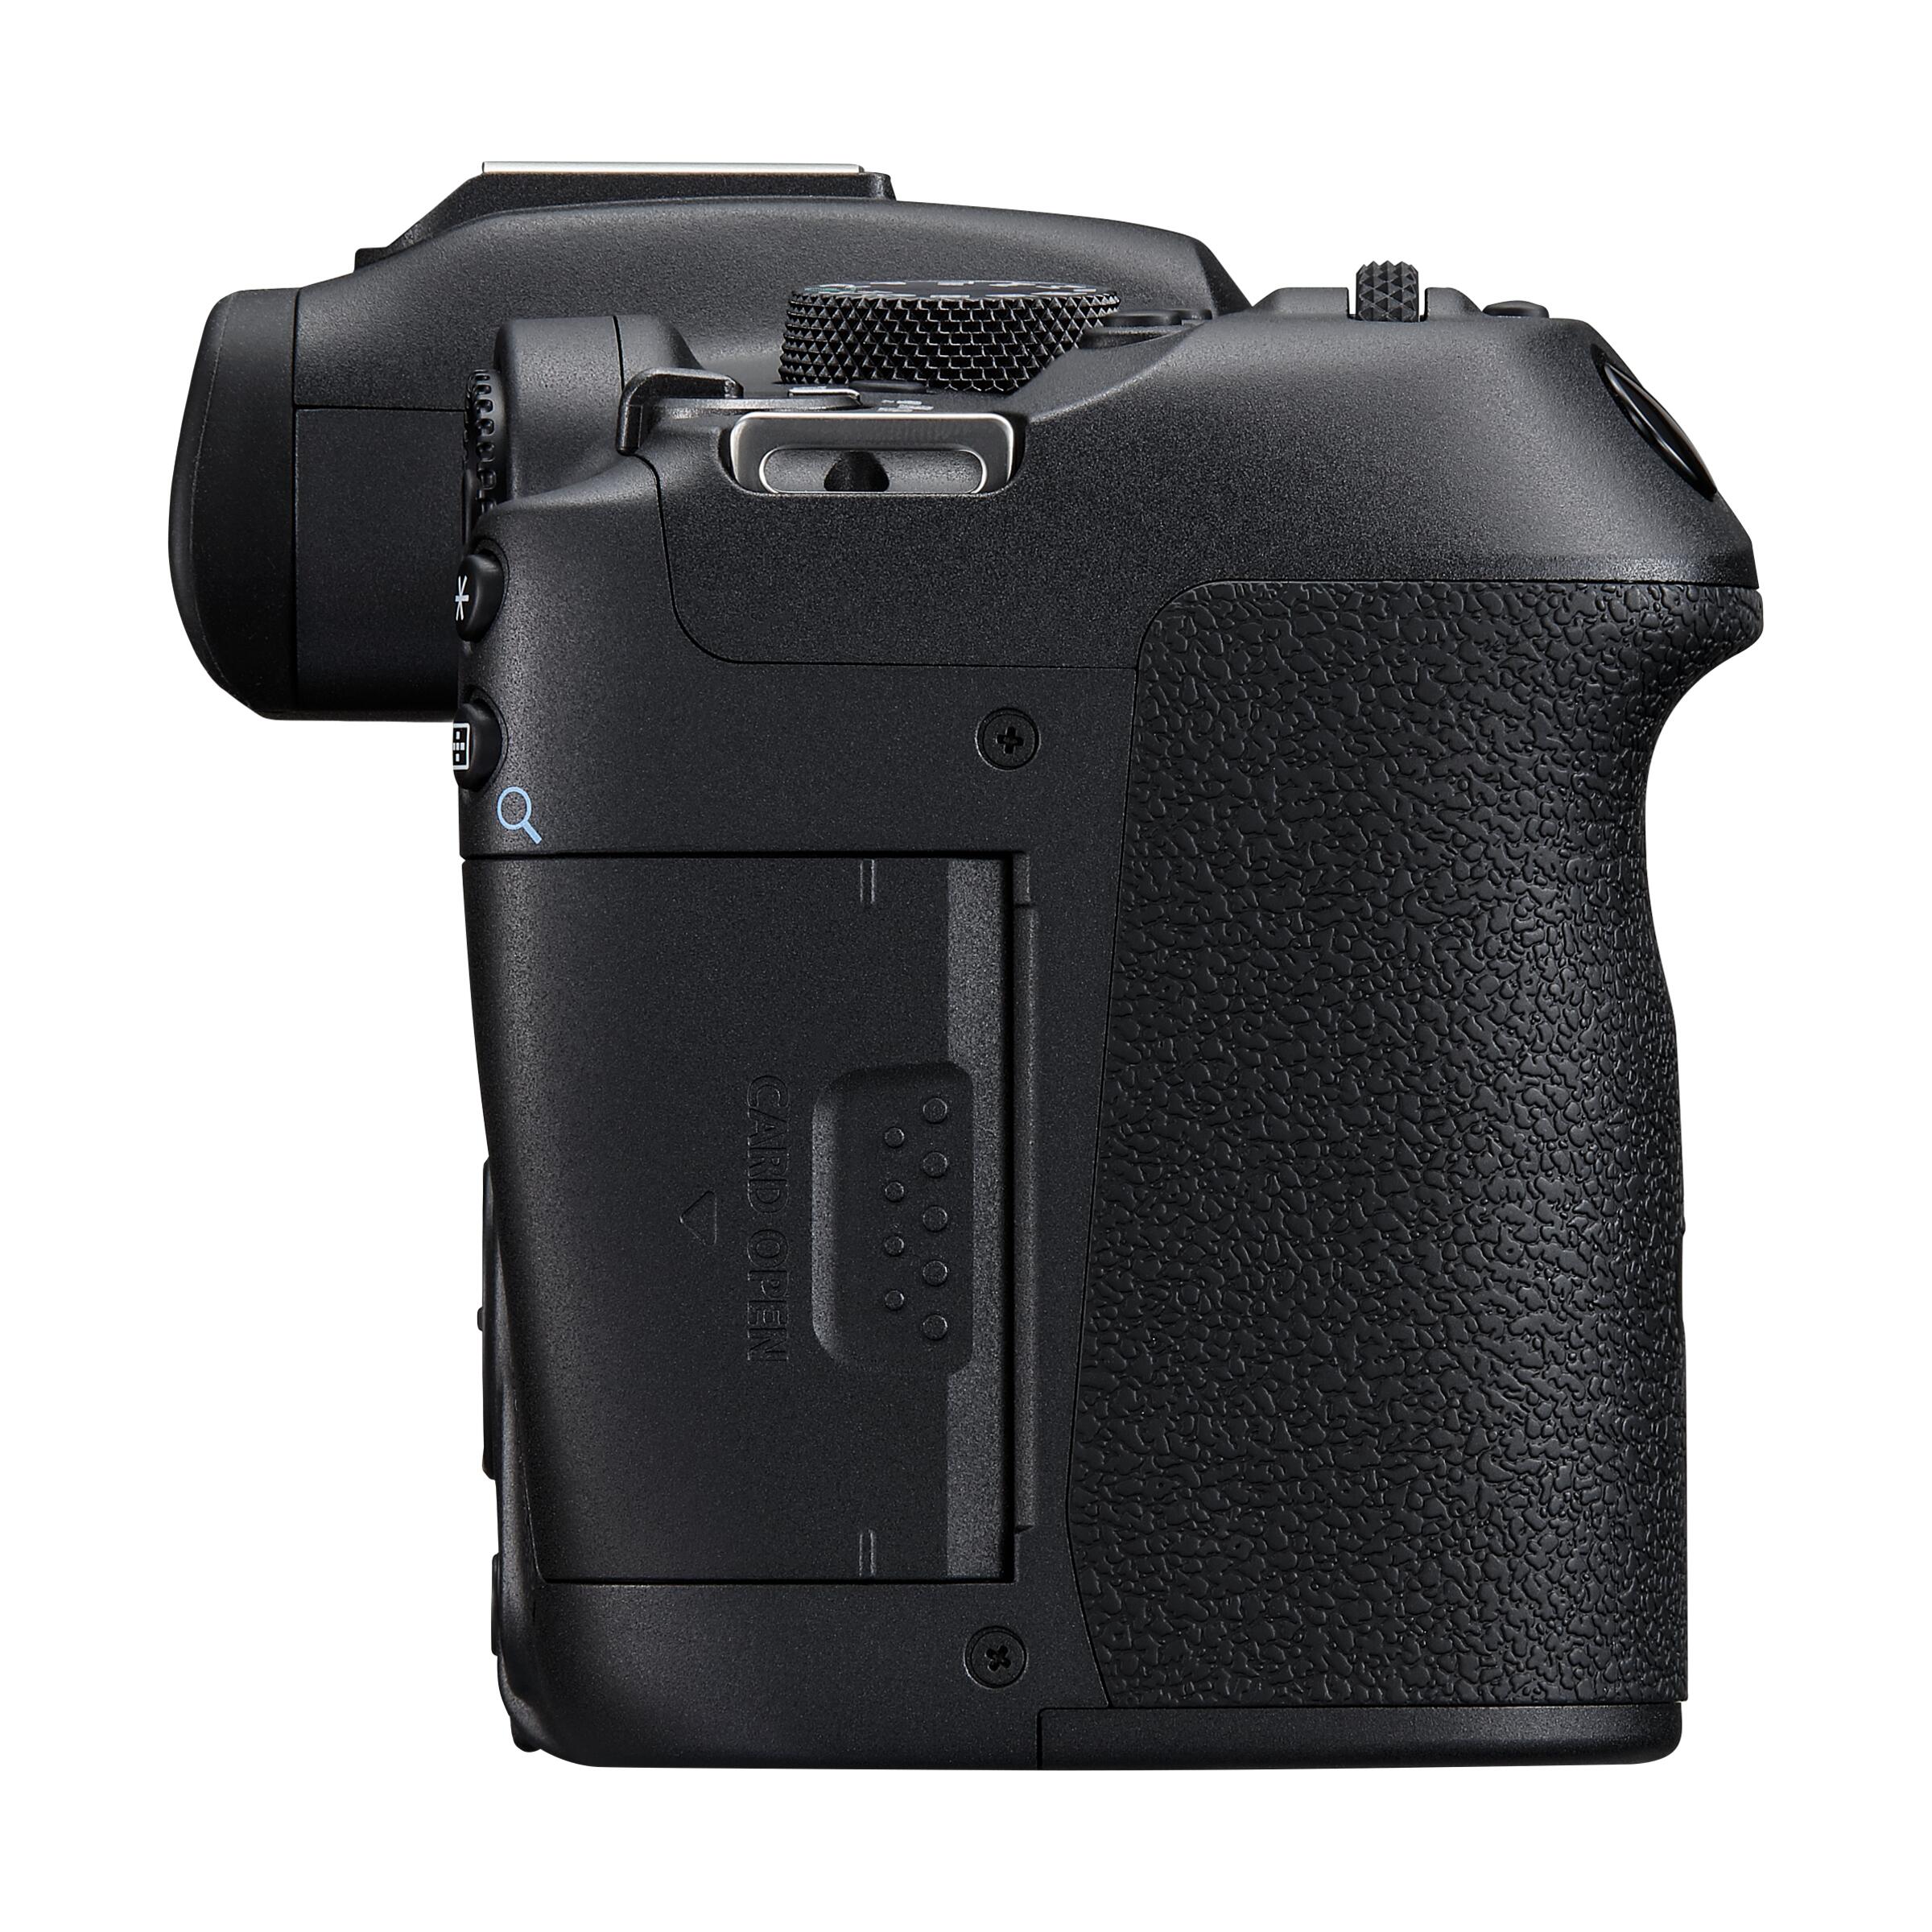 Canon EOS R7 + EF-EOS R Adapter